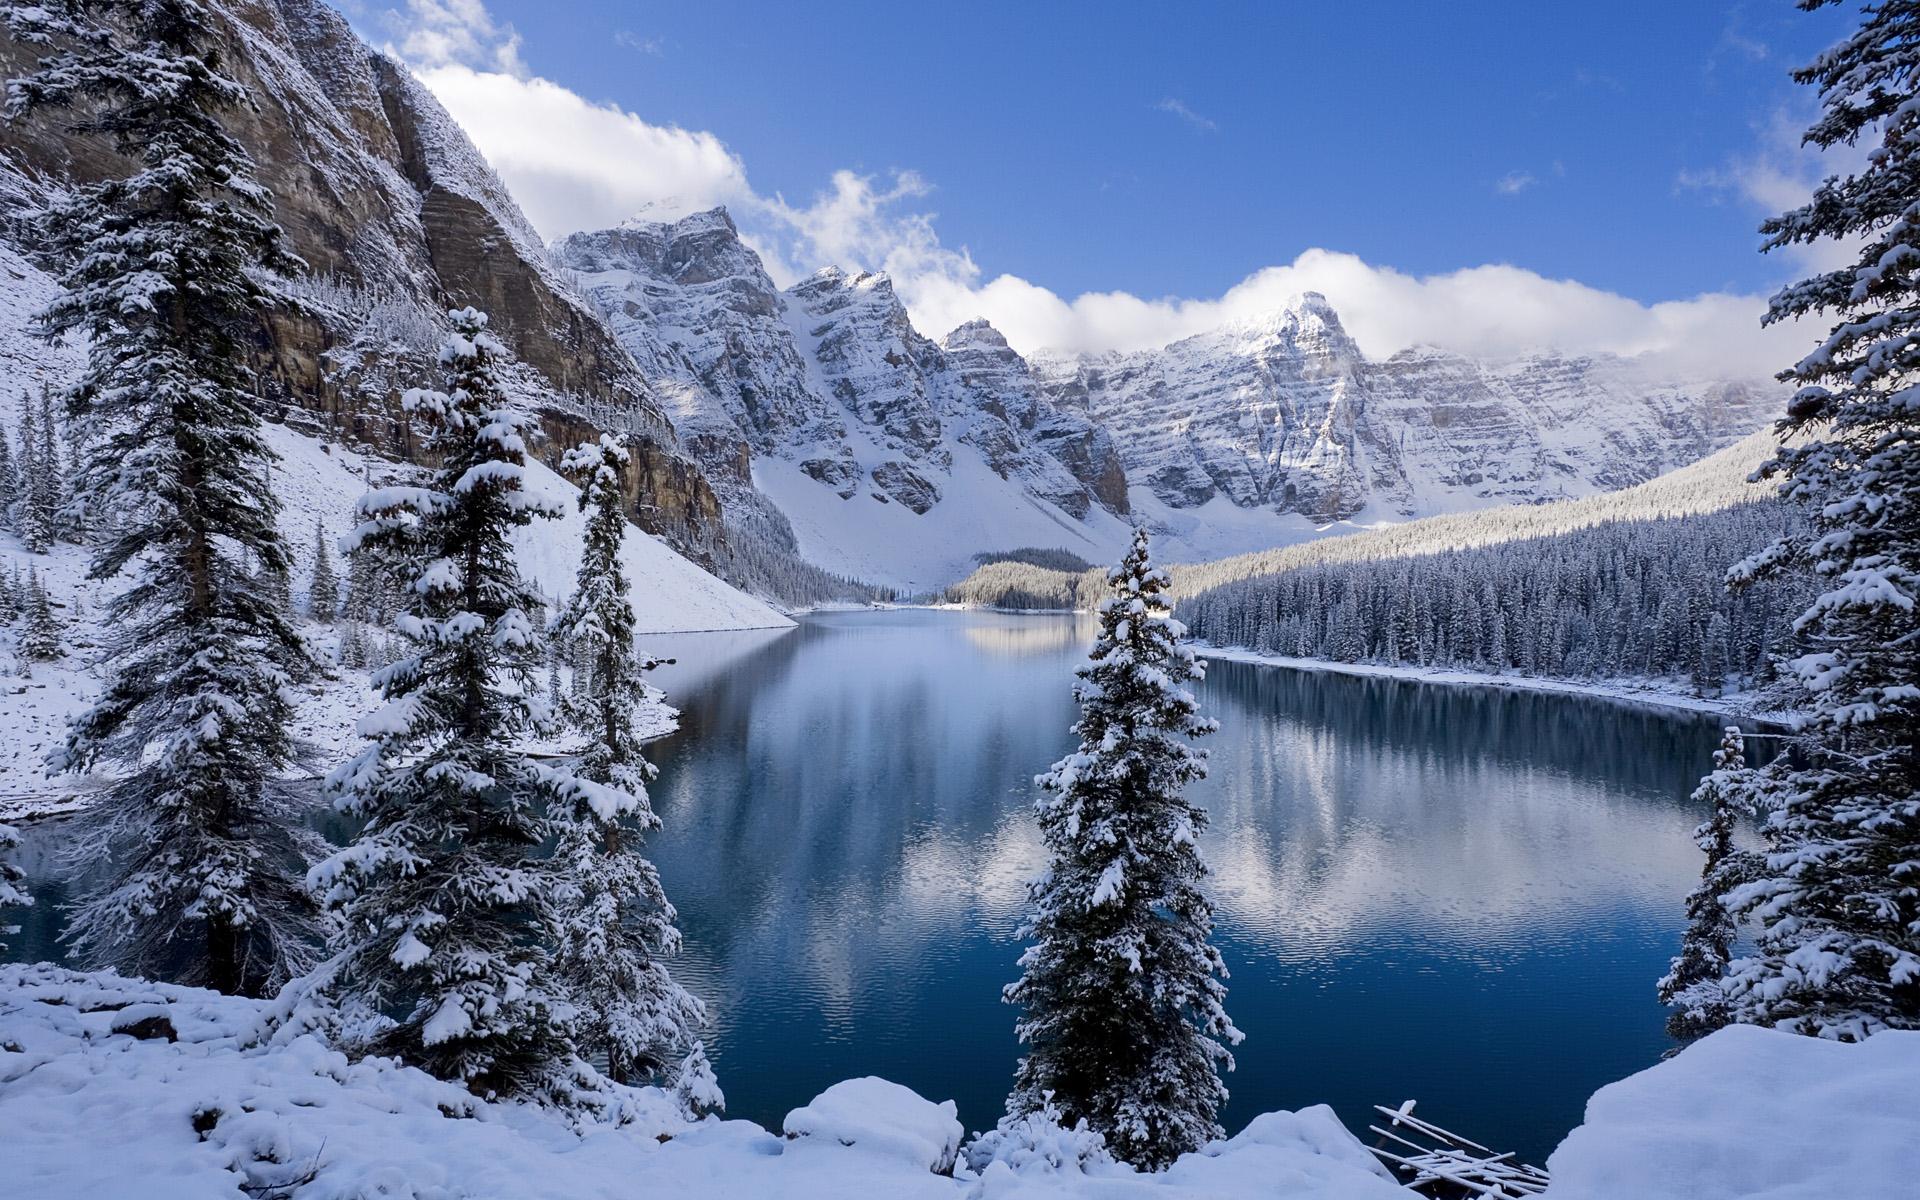 Winter Mountain Lake Scenes for Desktop Wallpapers